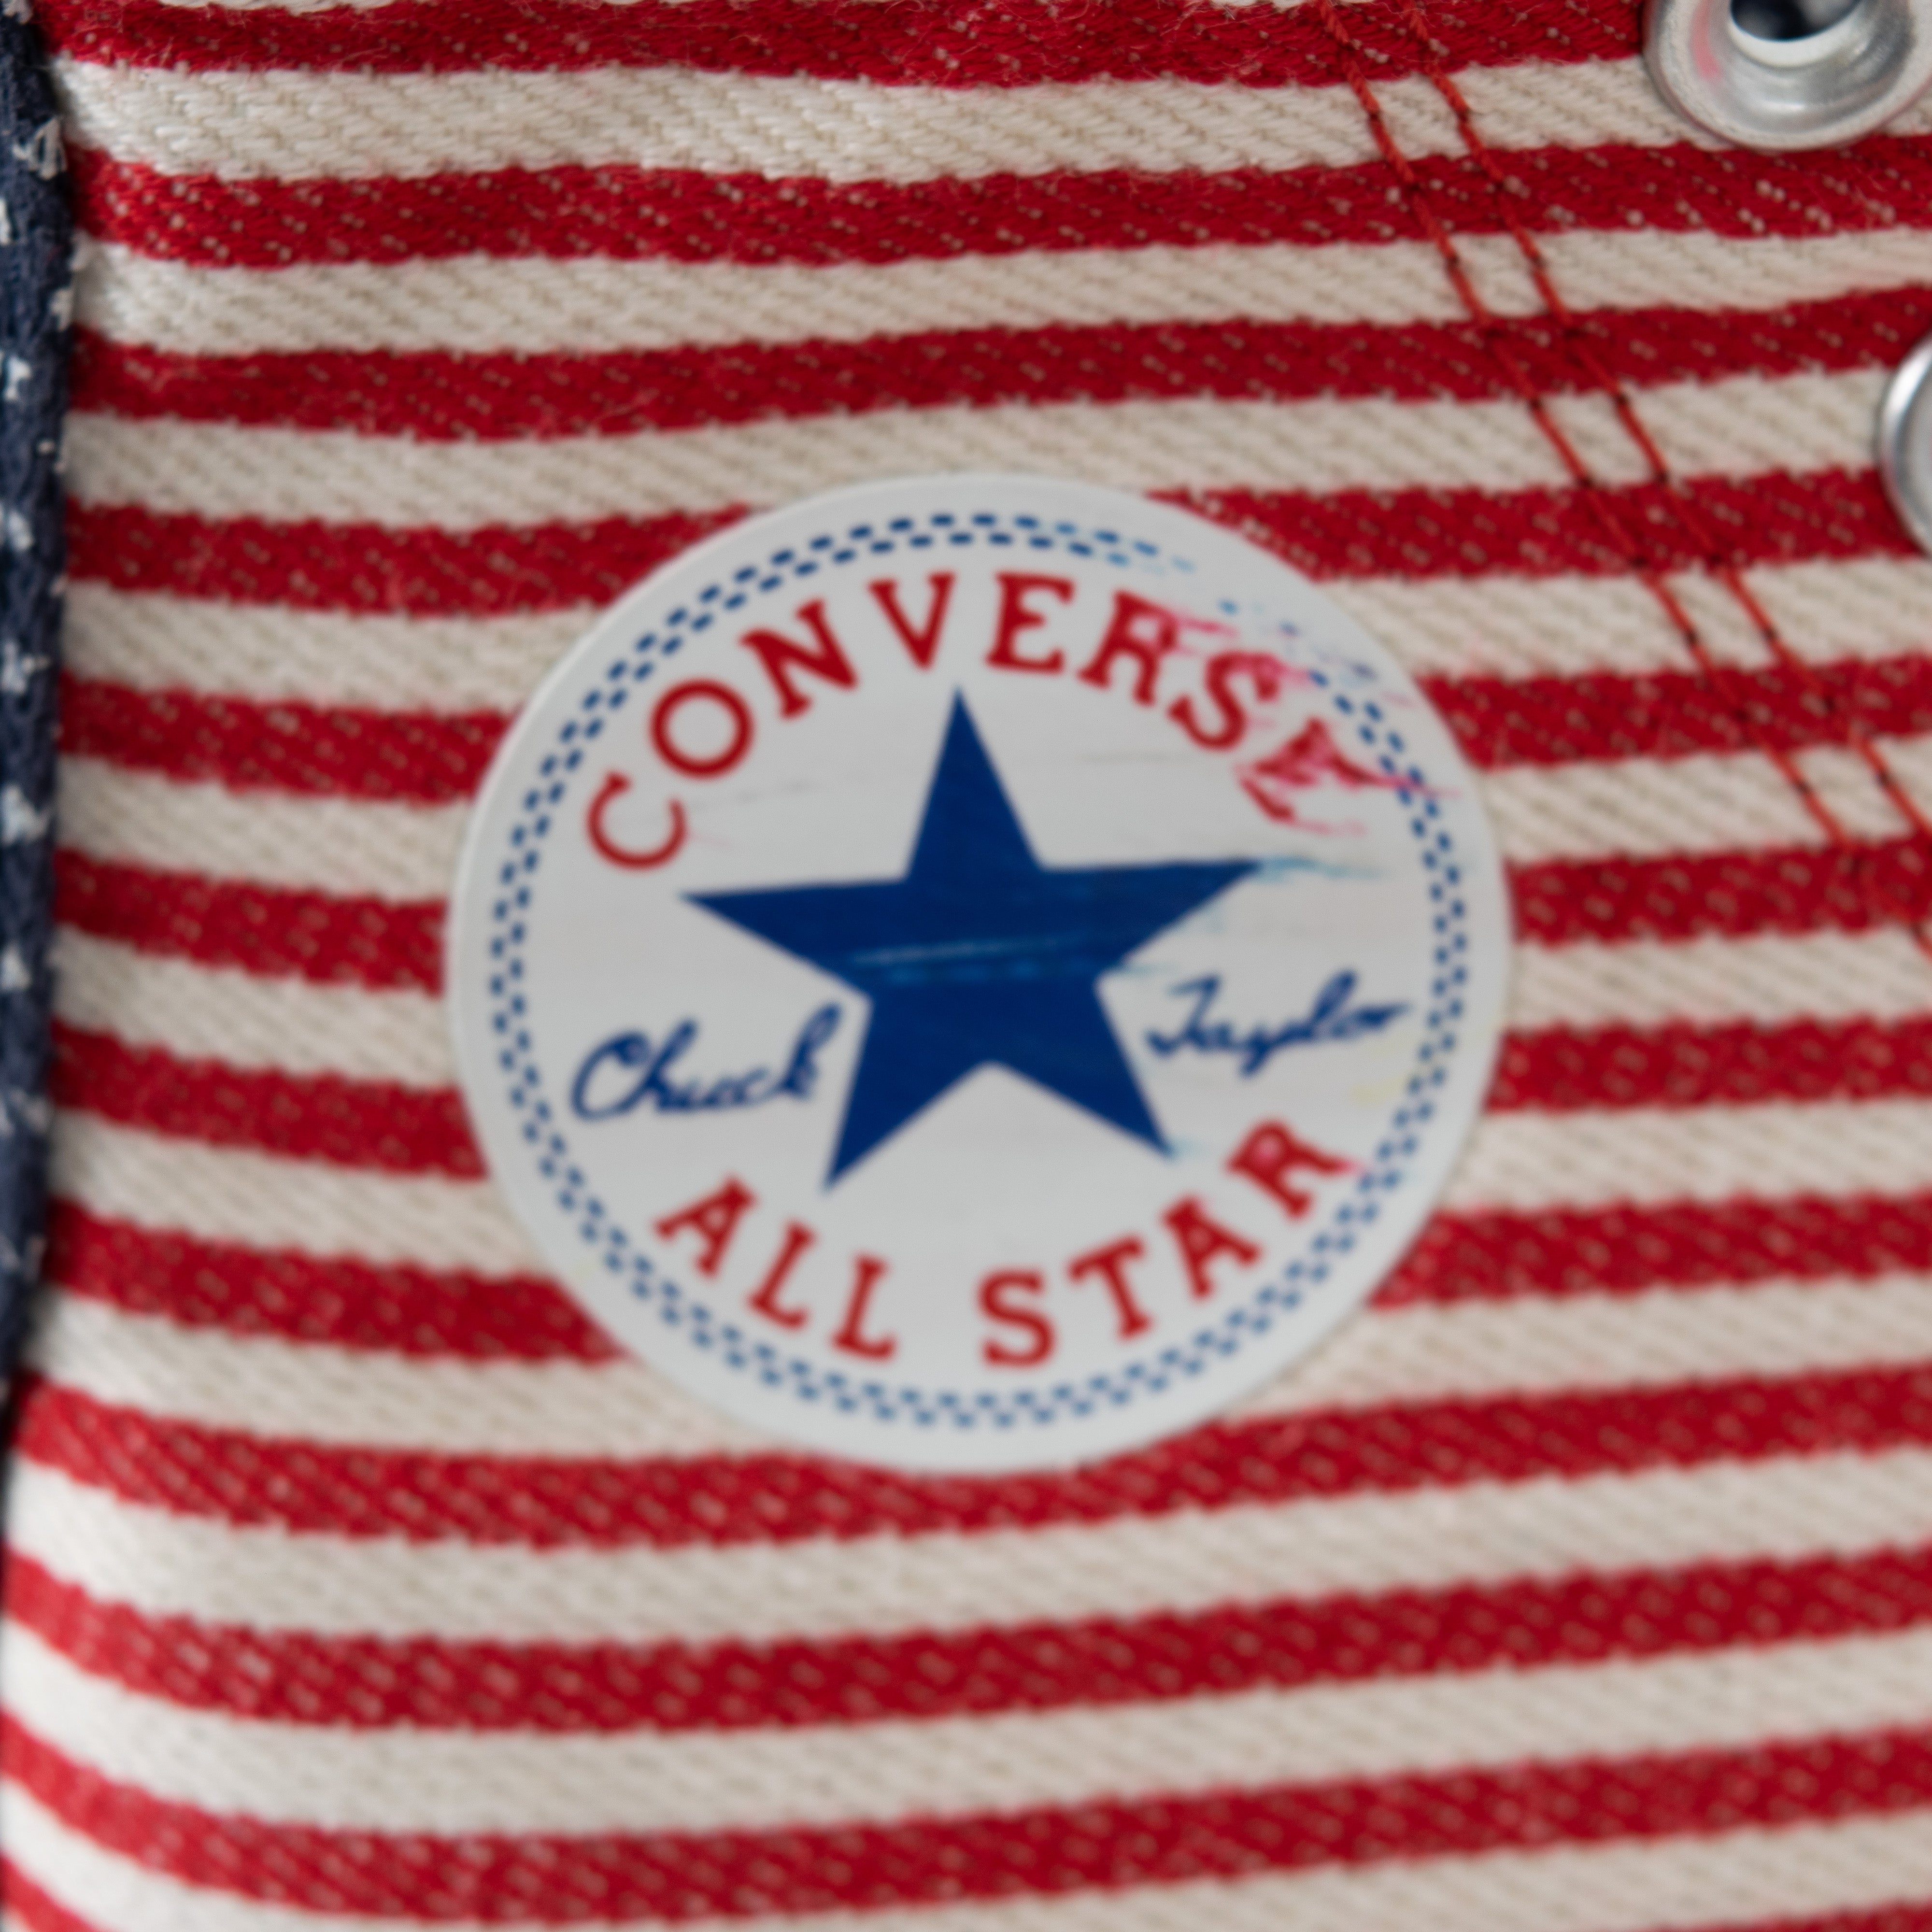 Converse Chuck Taylor All Star American Flag Striped Sneakers Women's EU36